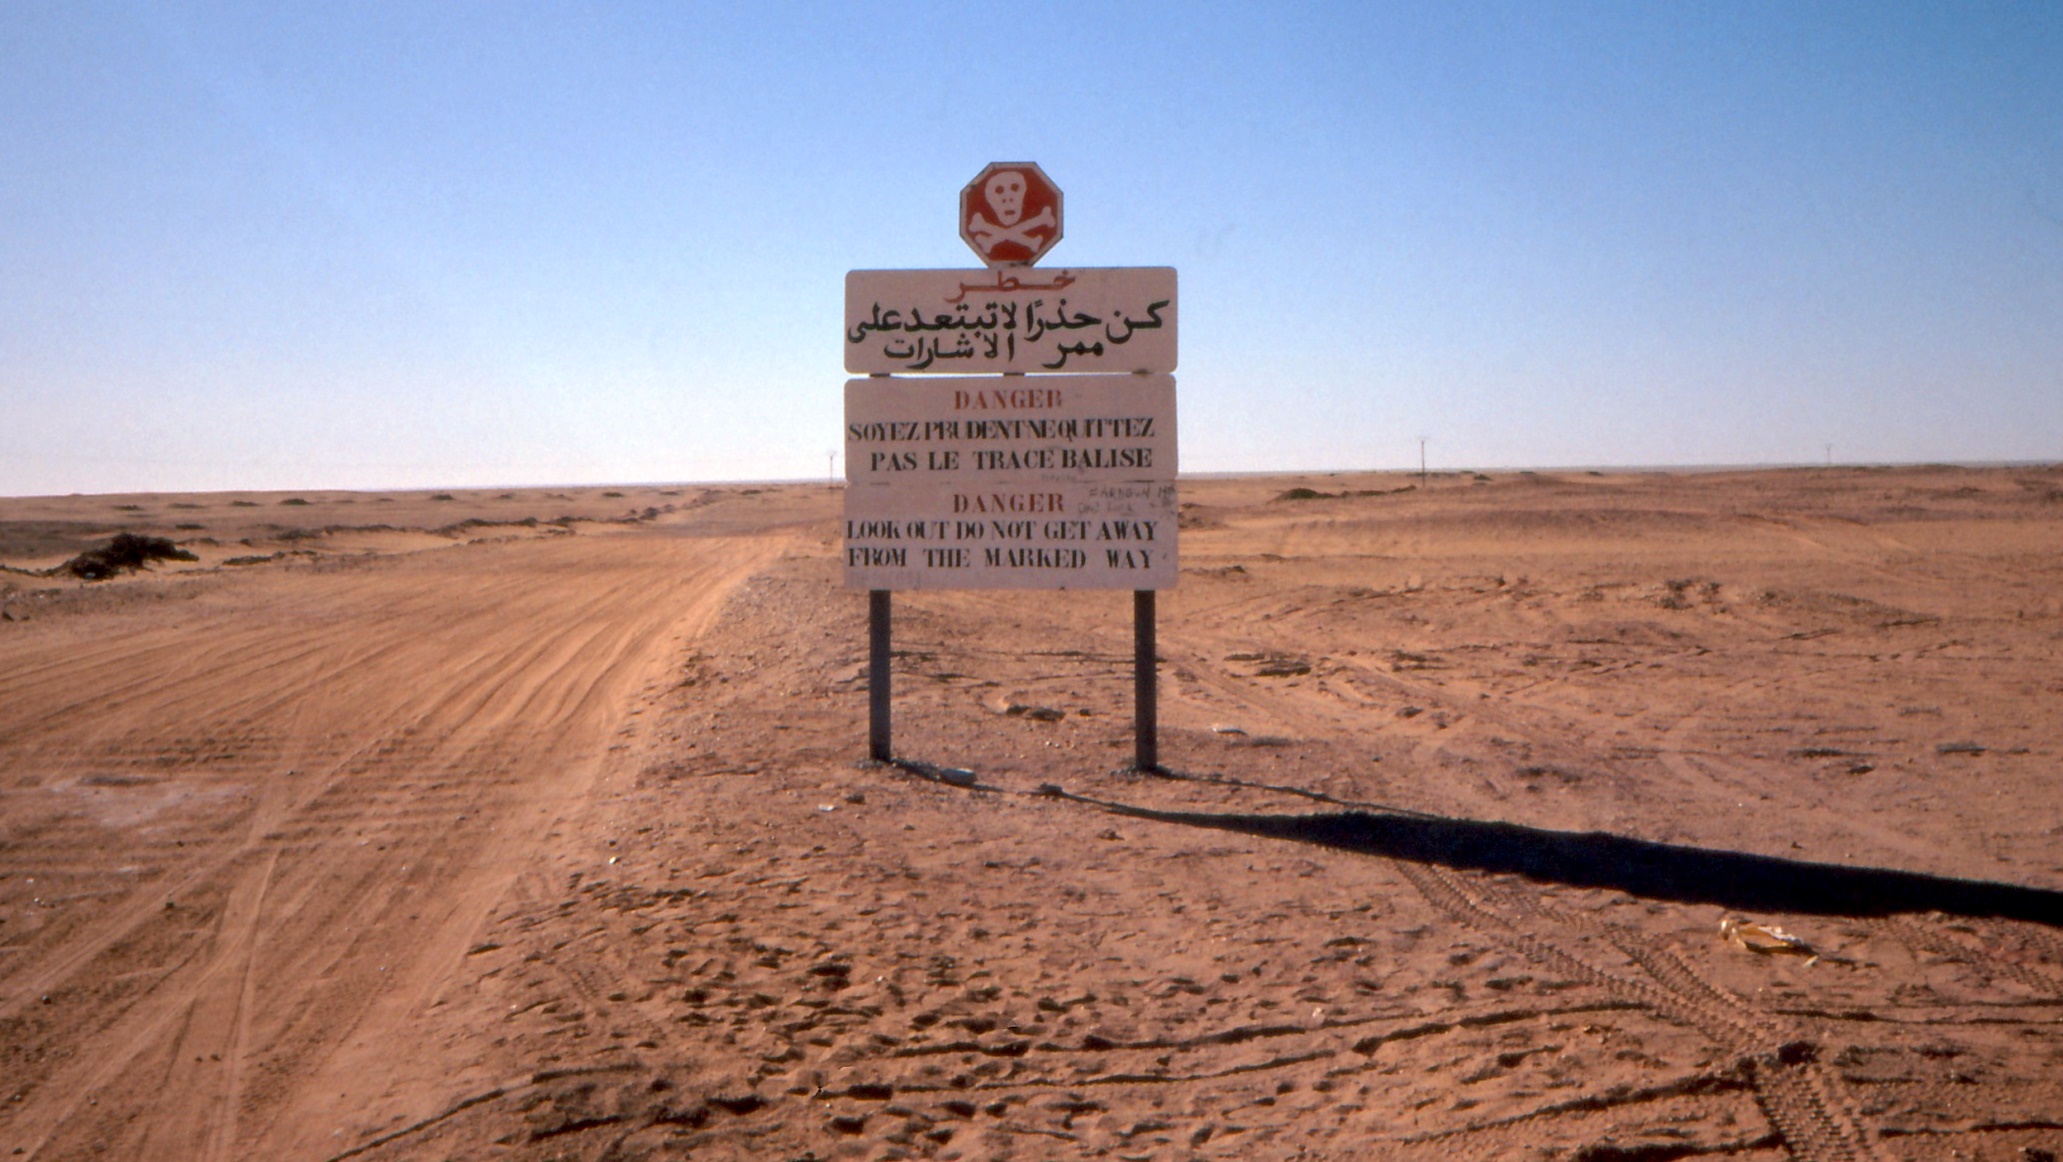 Tanezrouft Sahara